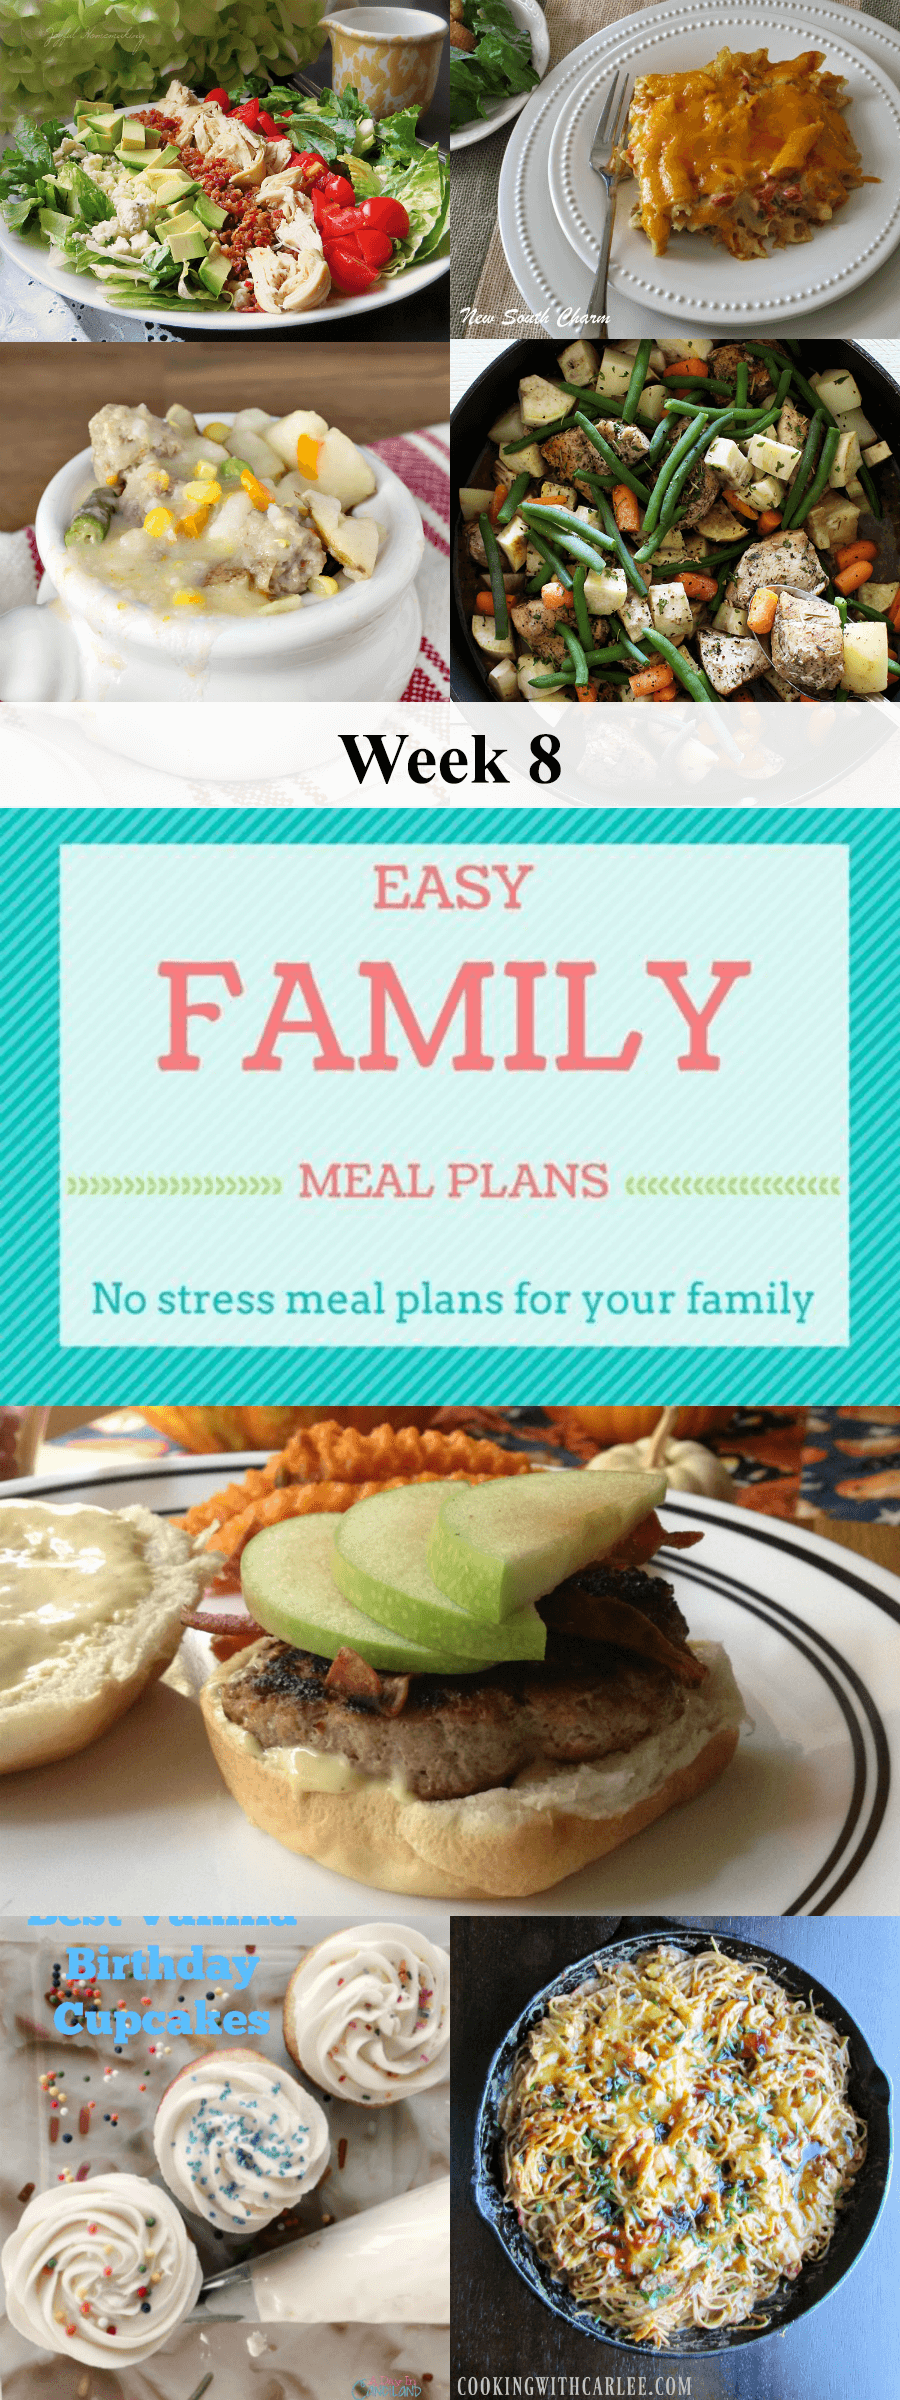 Easy Family Meal Plans Week 8 - Tastefully Eclectic